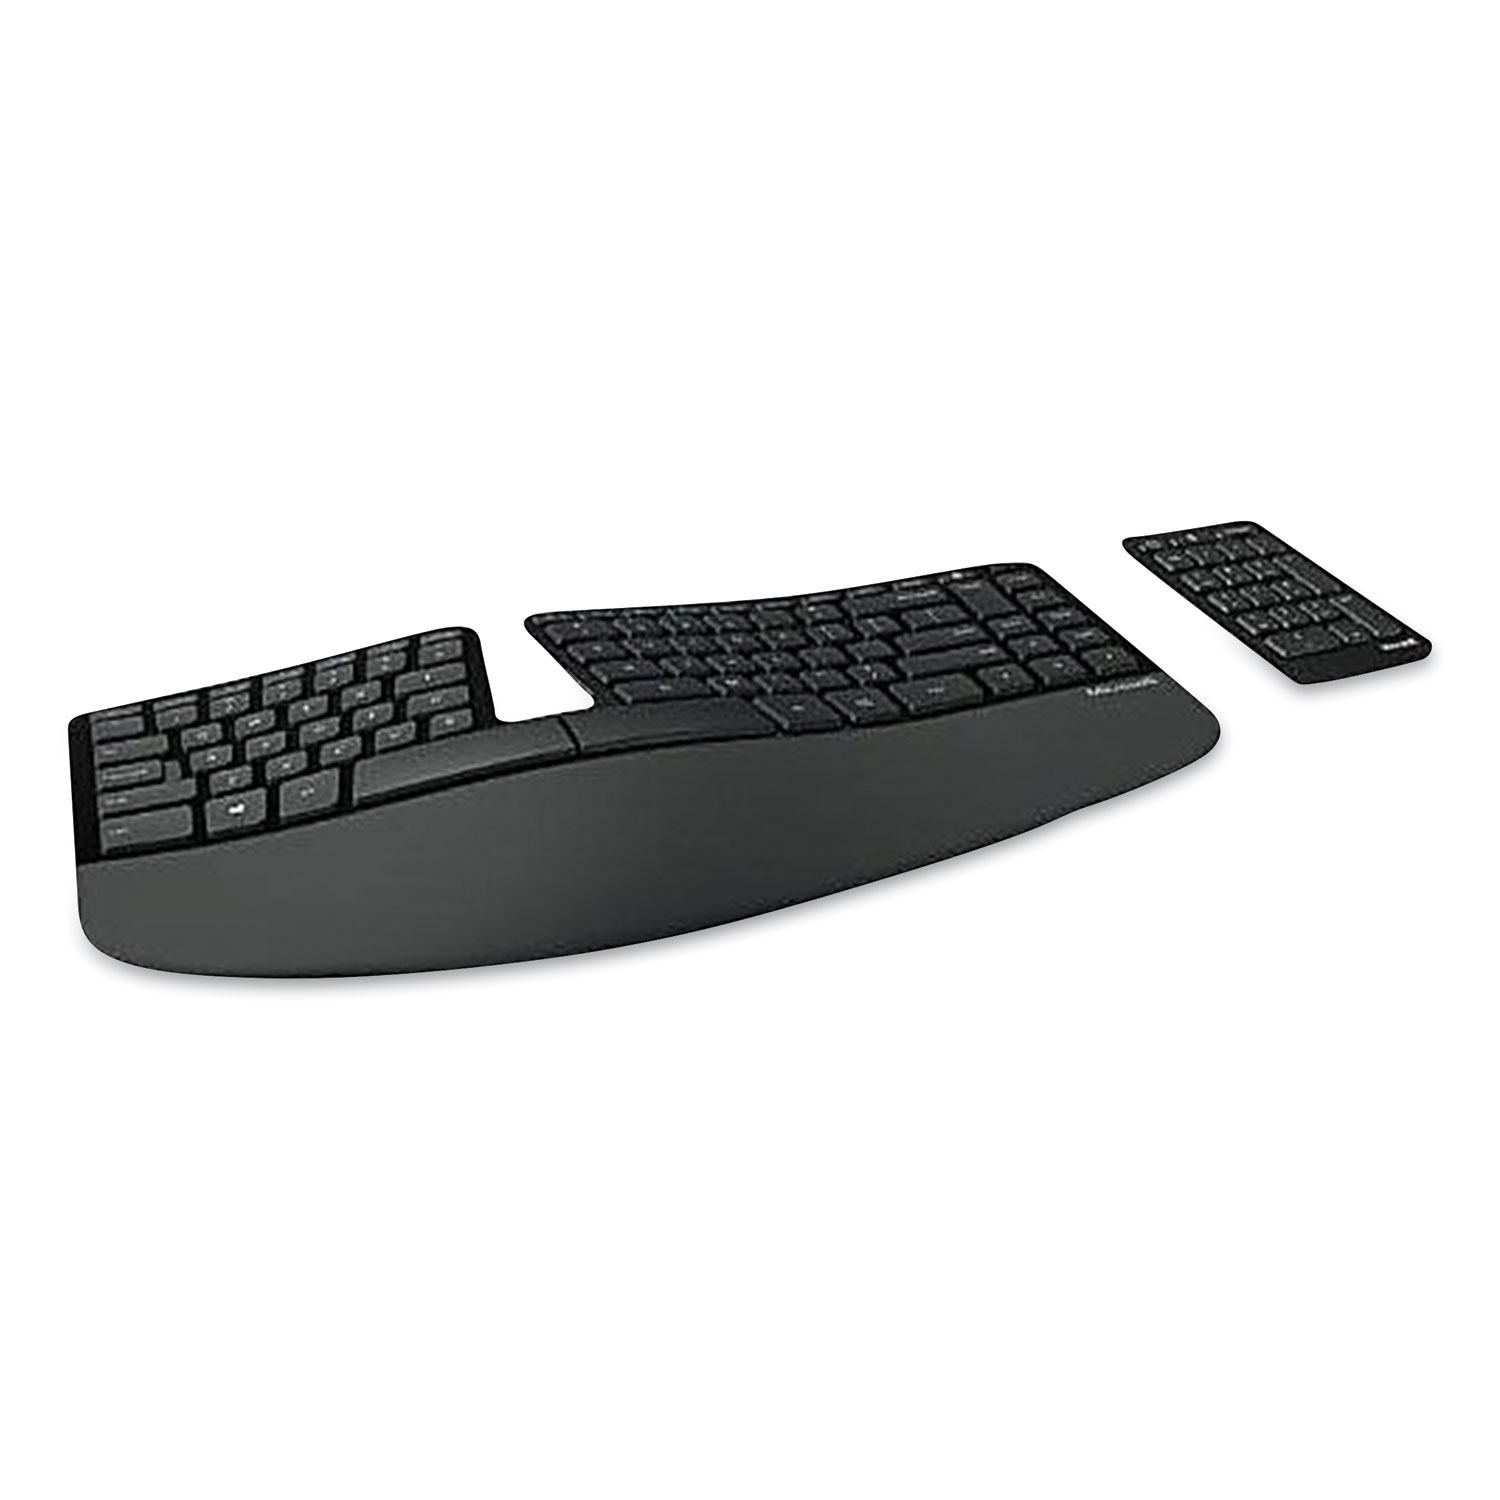  Microsoft 5KV-00001 Sculpt Ergonomic Wireless Keyboard, 104 Keys, Black (MSF206710) 